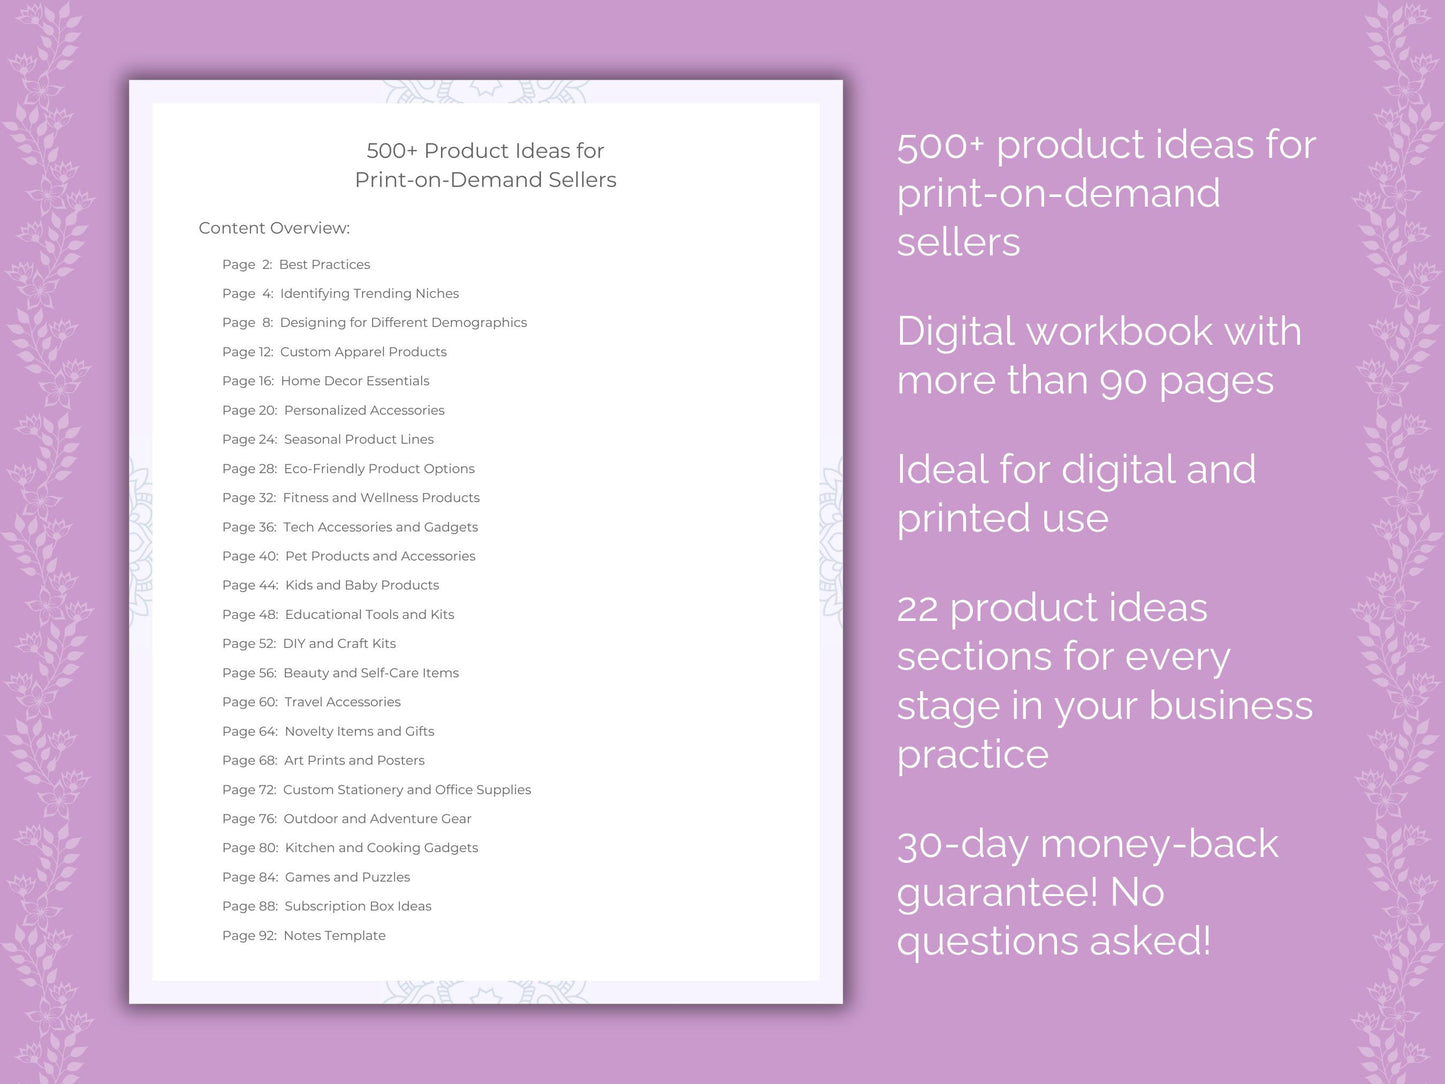 Print-on-Demand Sellers Business Workbook